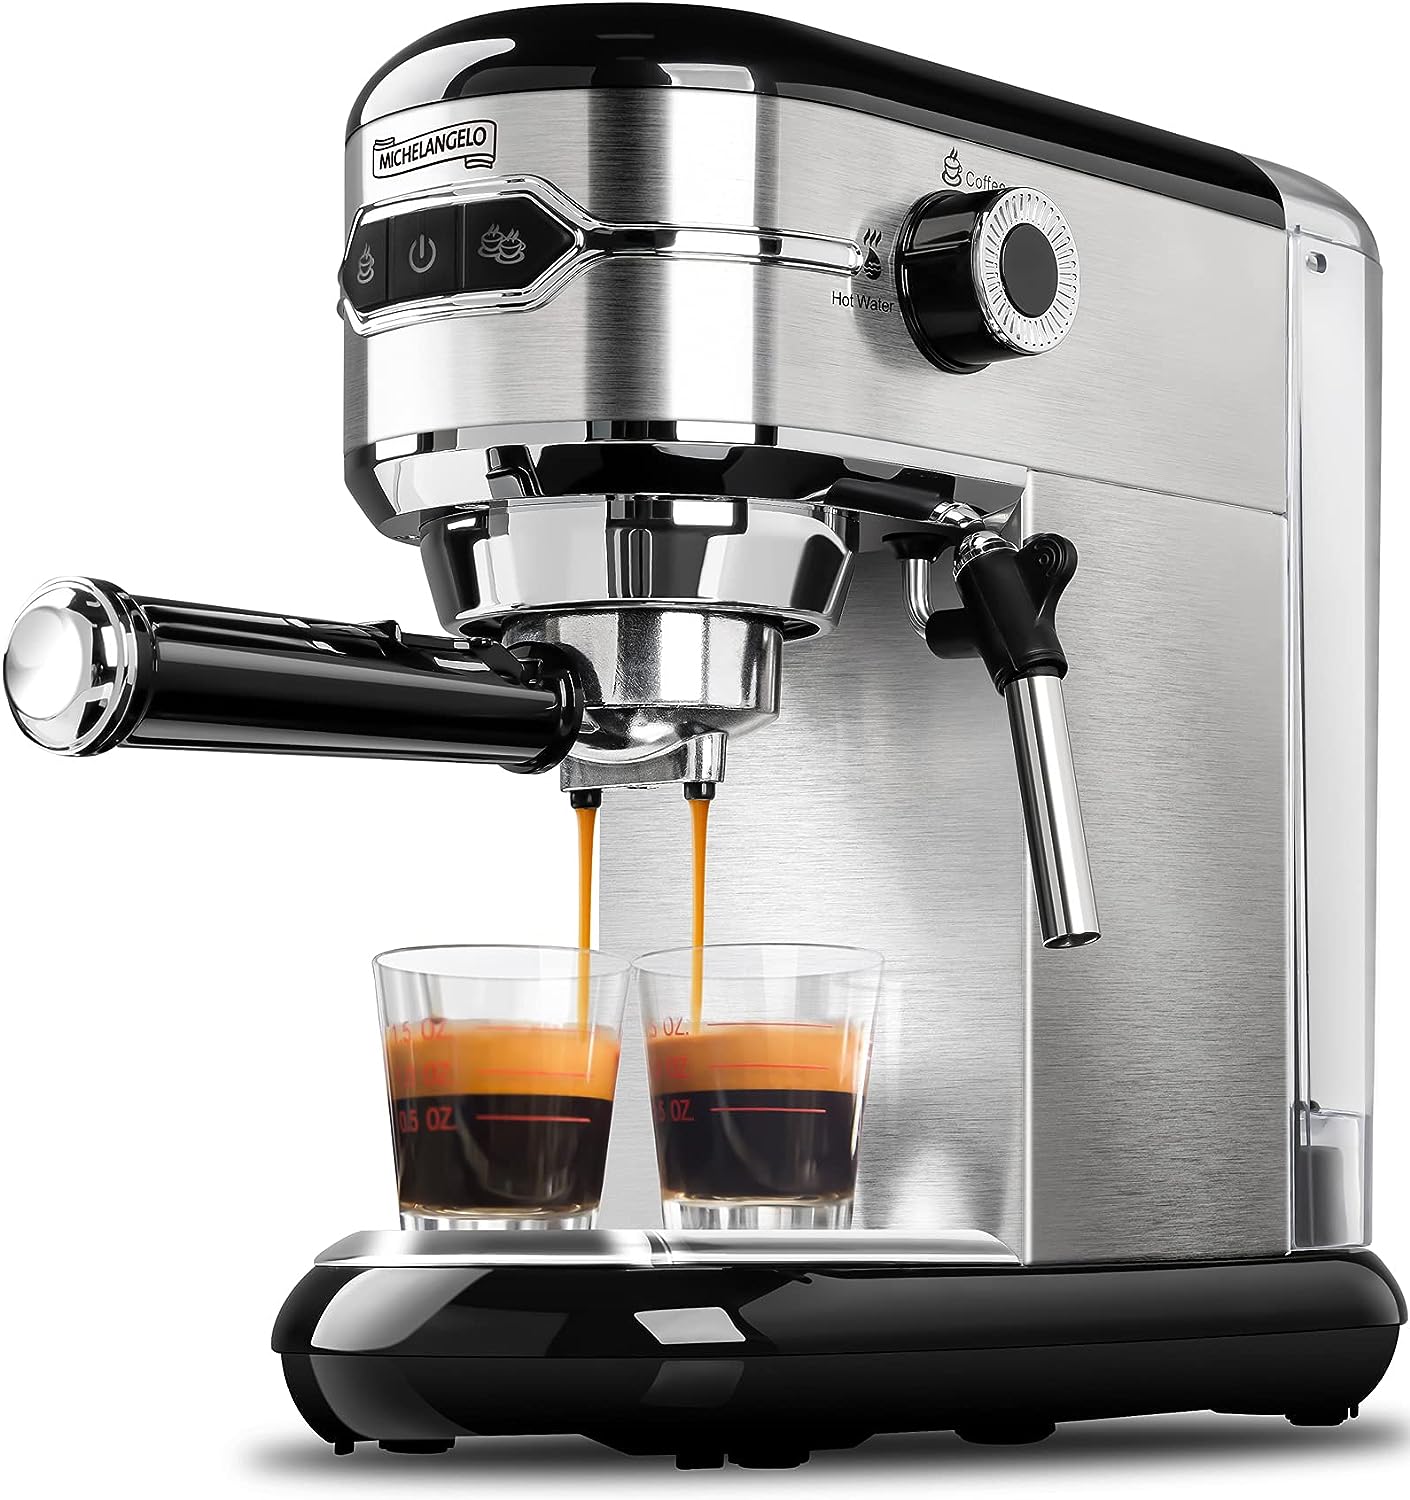 Choose an espresso machine for beginners.